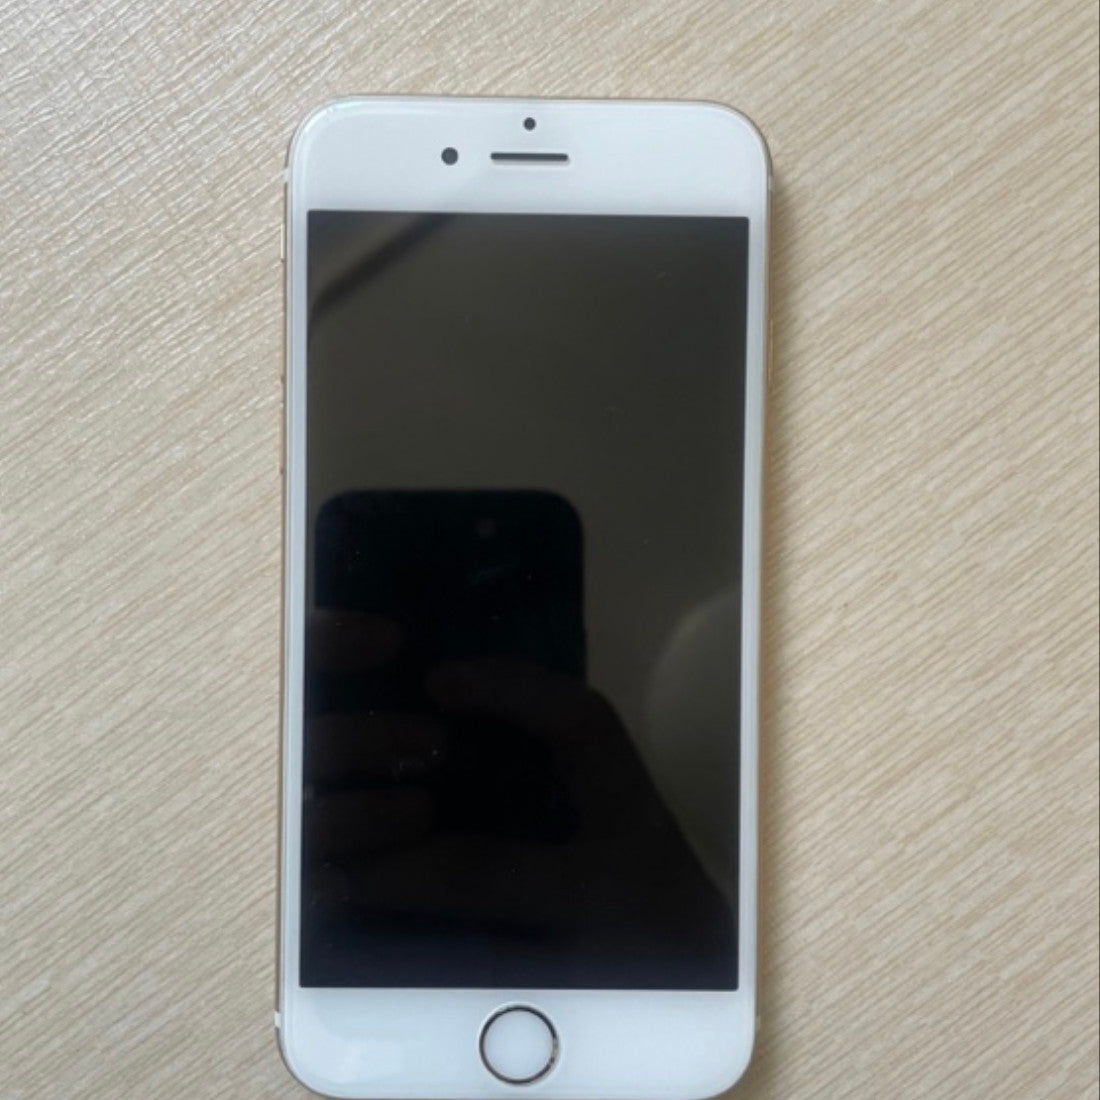 Apple iPhone 6 (A1586) 32 GB gris espacial